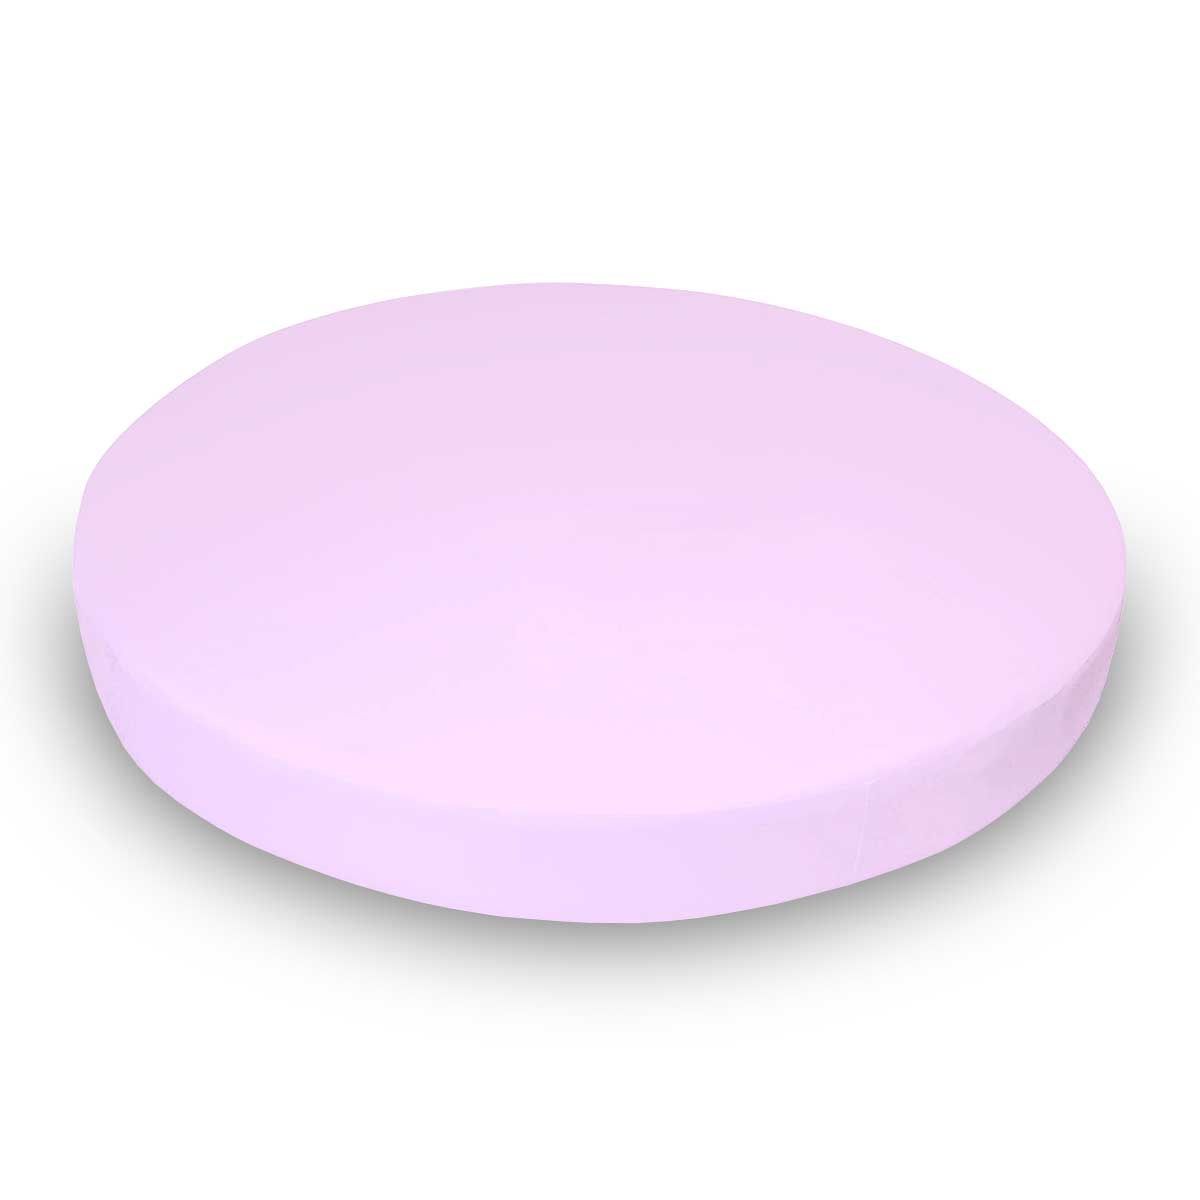 Oval Crib (Stokke Sleepi) - Flannel FS3 - Pink - Fitted  Oval